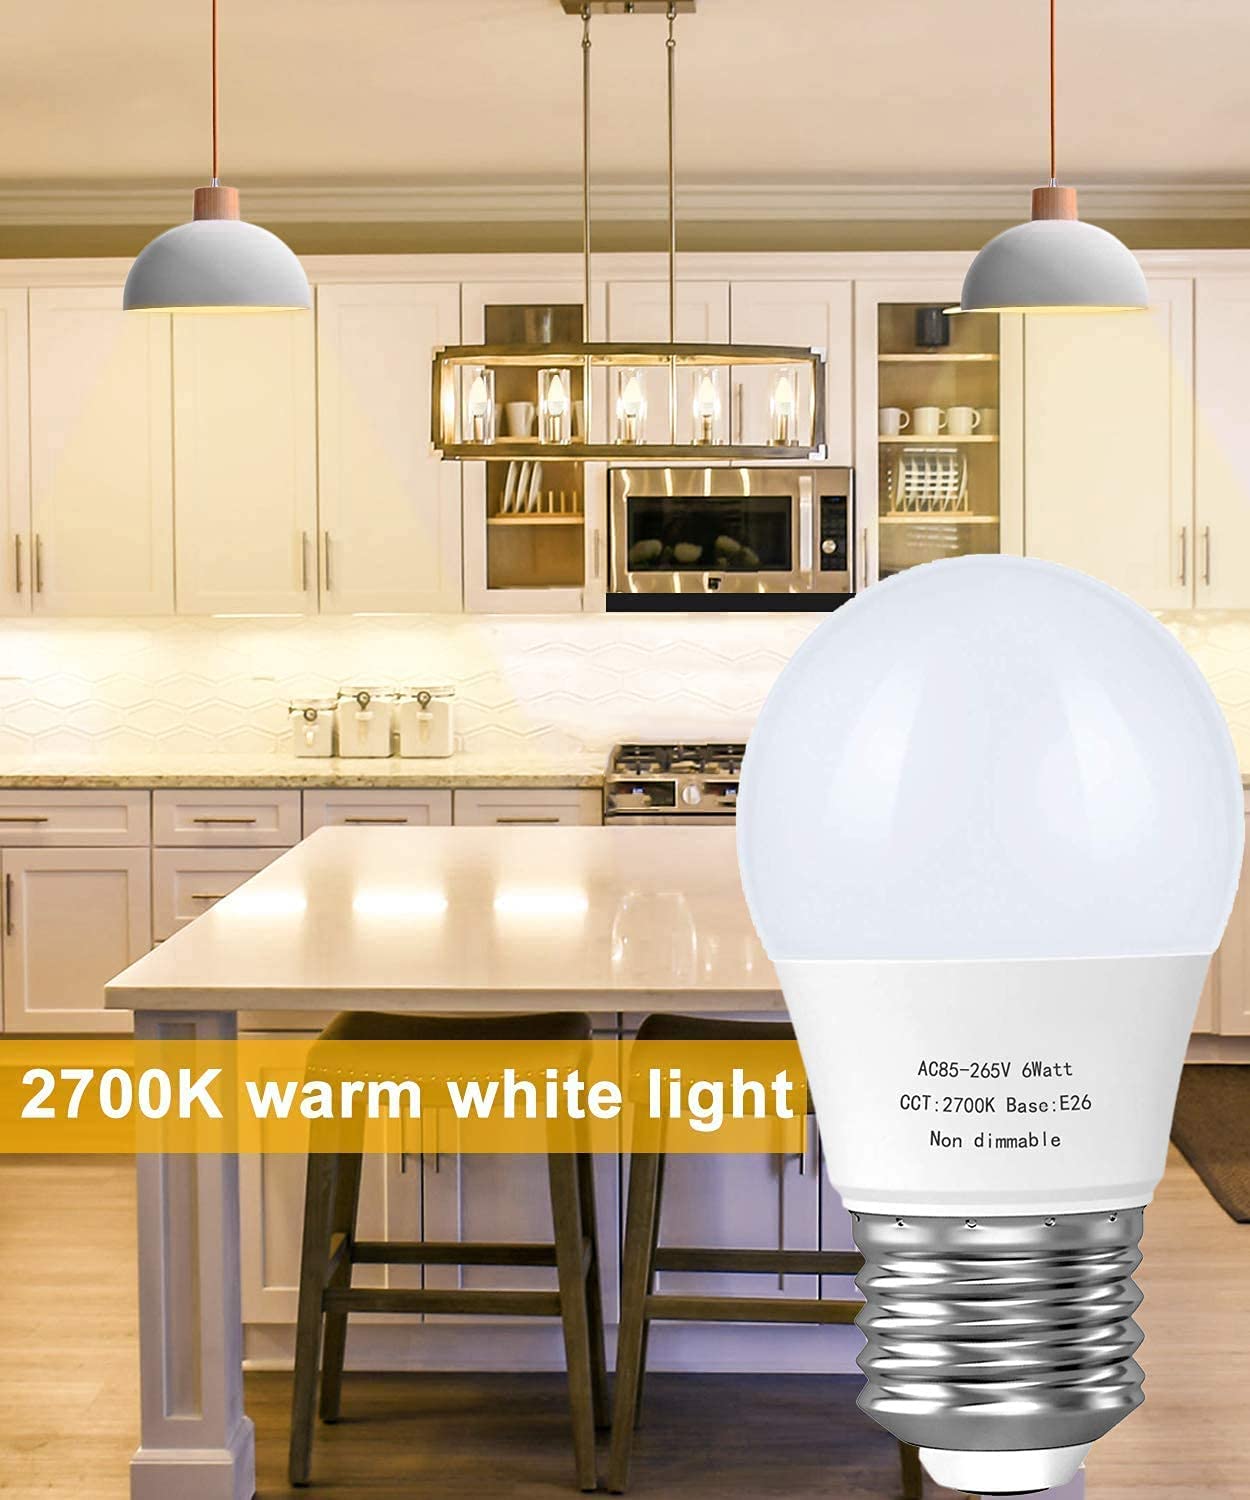 A15 Led Bulb, E26 Base Appliance Light Bulb, 6W(60 Watt Incandescent Equivalent), 5000K Daylight Ceiling Fan Light Bulbs, 550 LM, Small Lightbulbs, Non-Dimmable,6 Pack